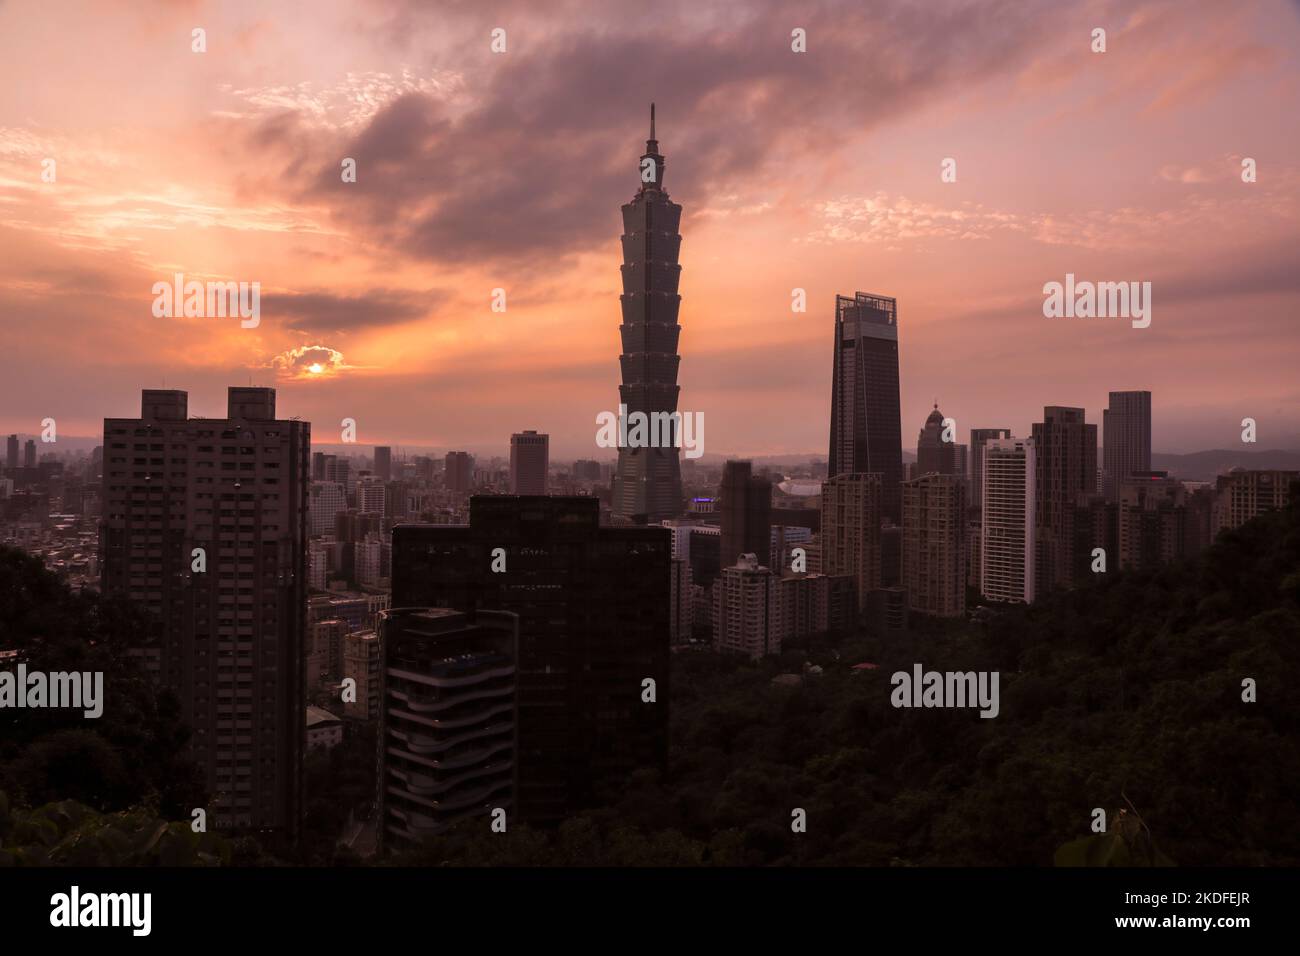 TAIWEI CAPITALE DE TAIWAN Stockfoto